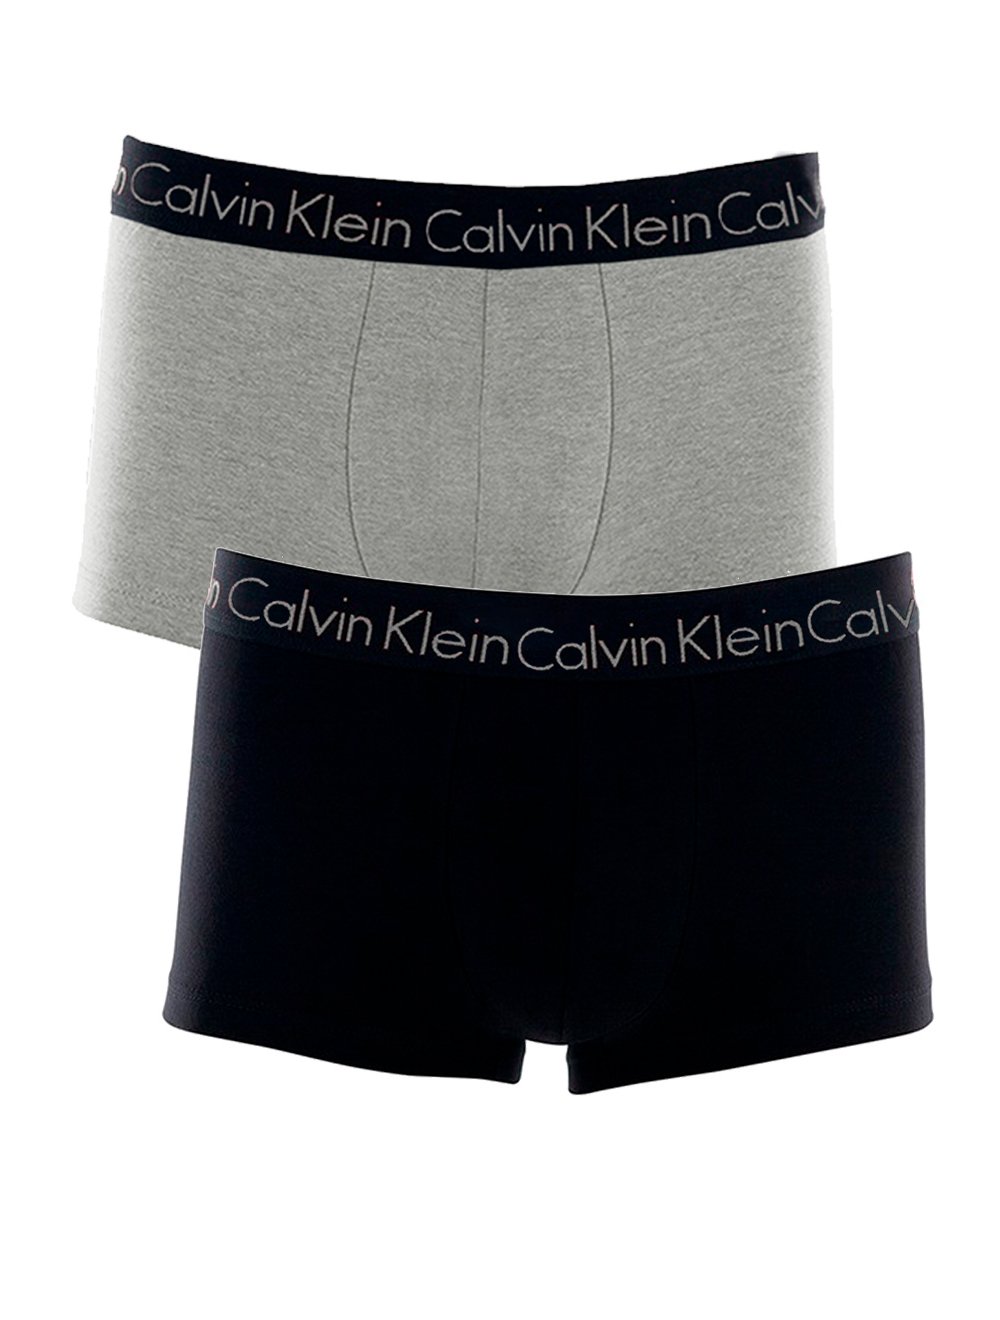 Calvin Klein CK One Mesh Trunk Black